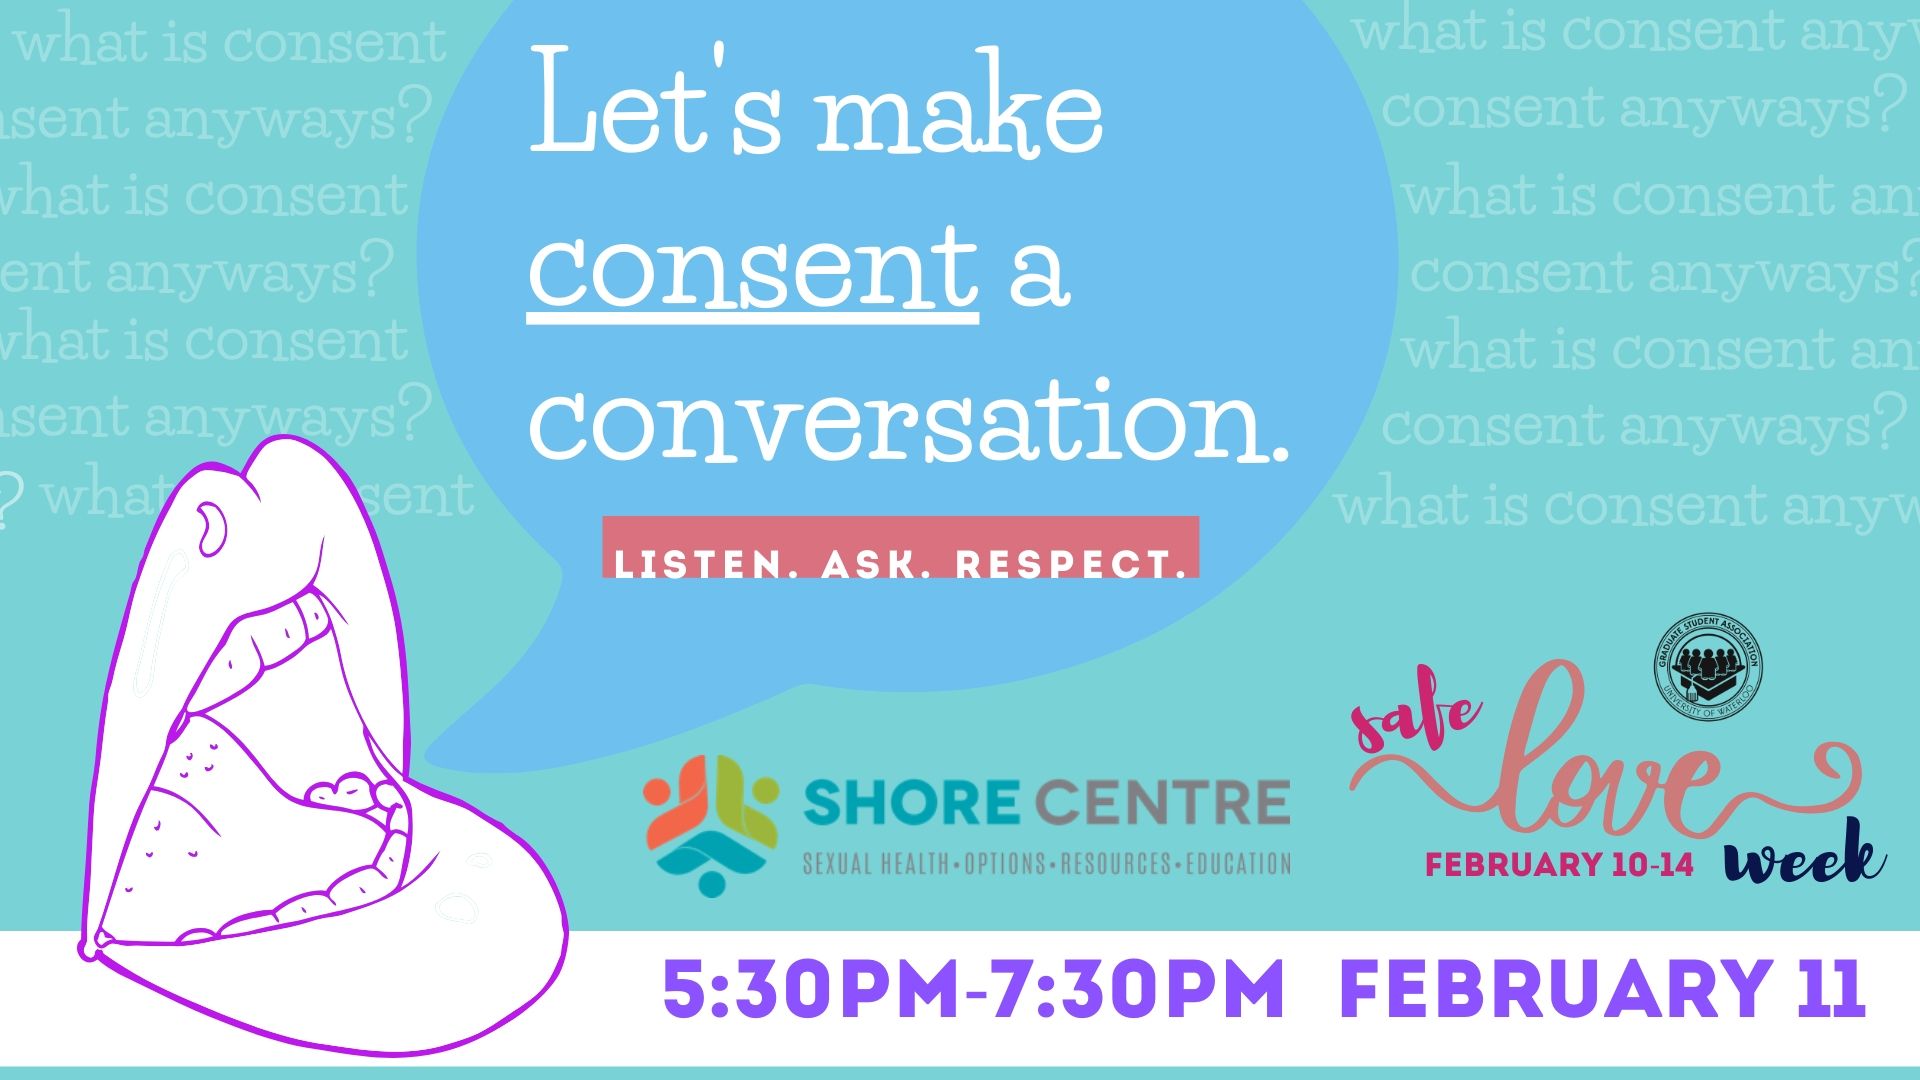 lets make consent a conversation event poster